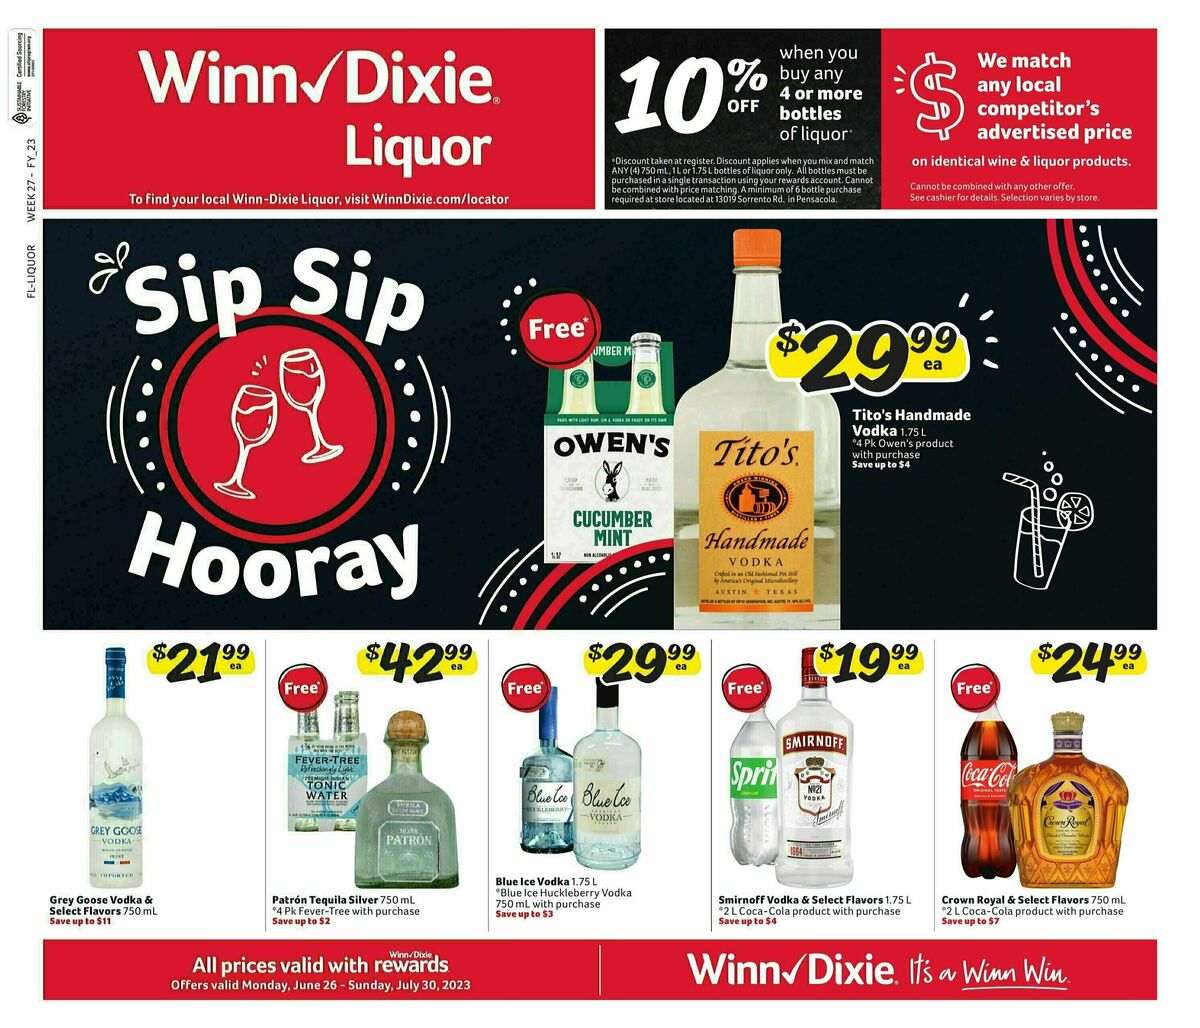 Winn-Dixie Liquor Weekly Ad from June 26